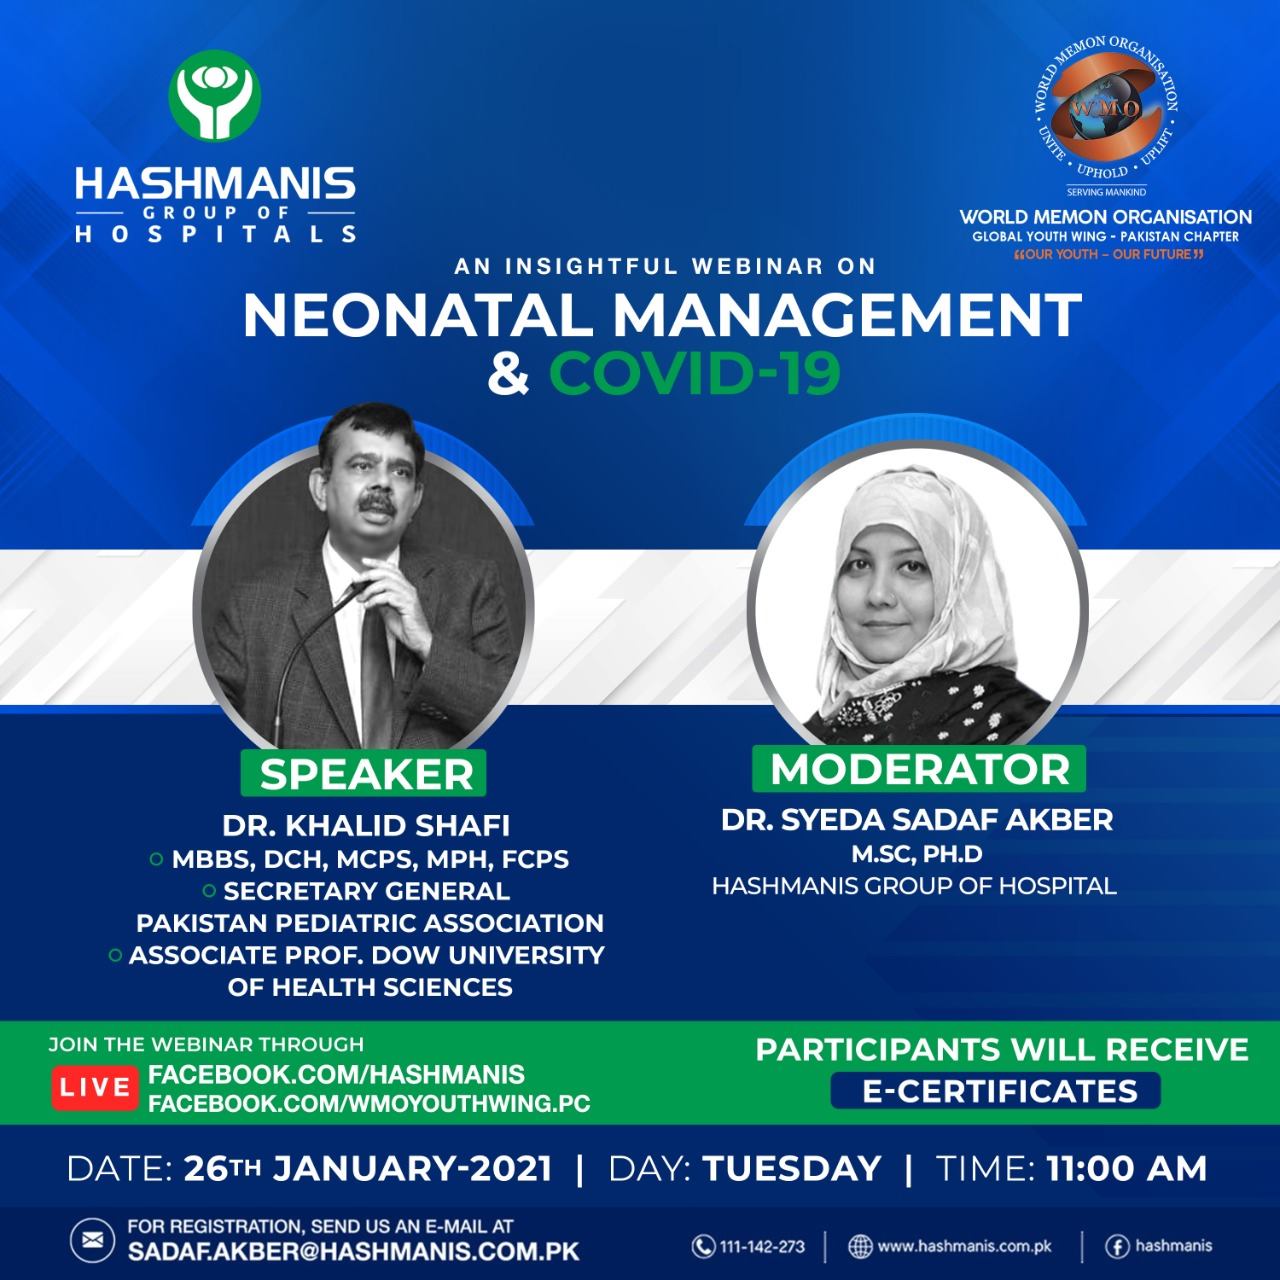 Neonatal Management & Covid-19